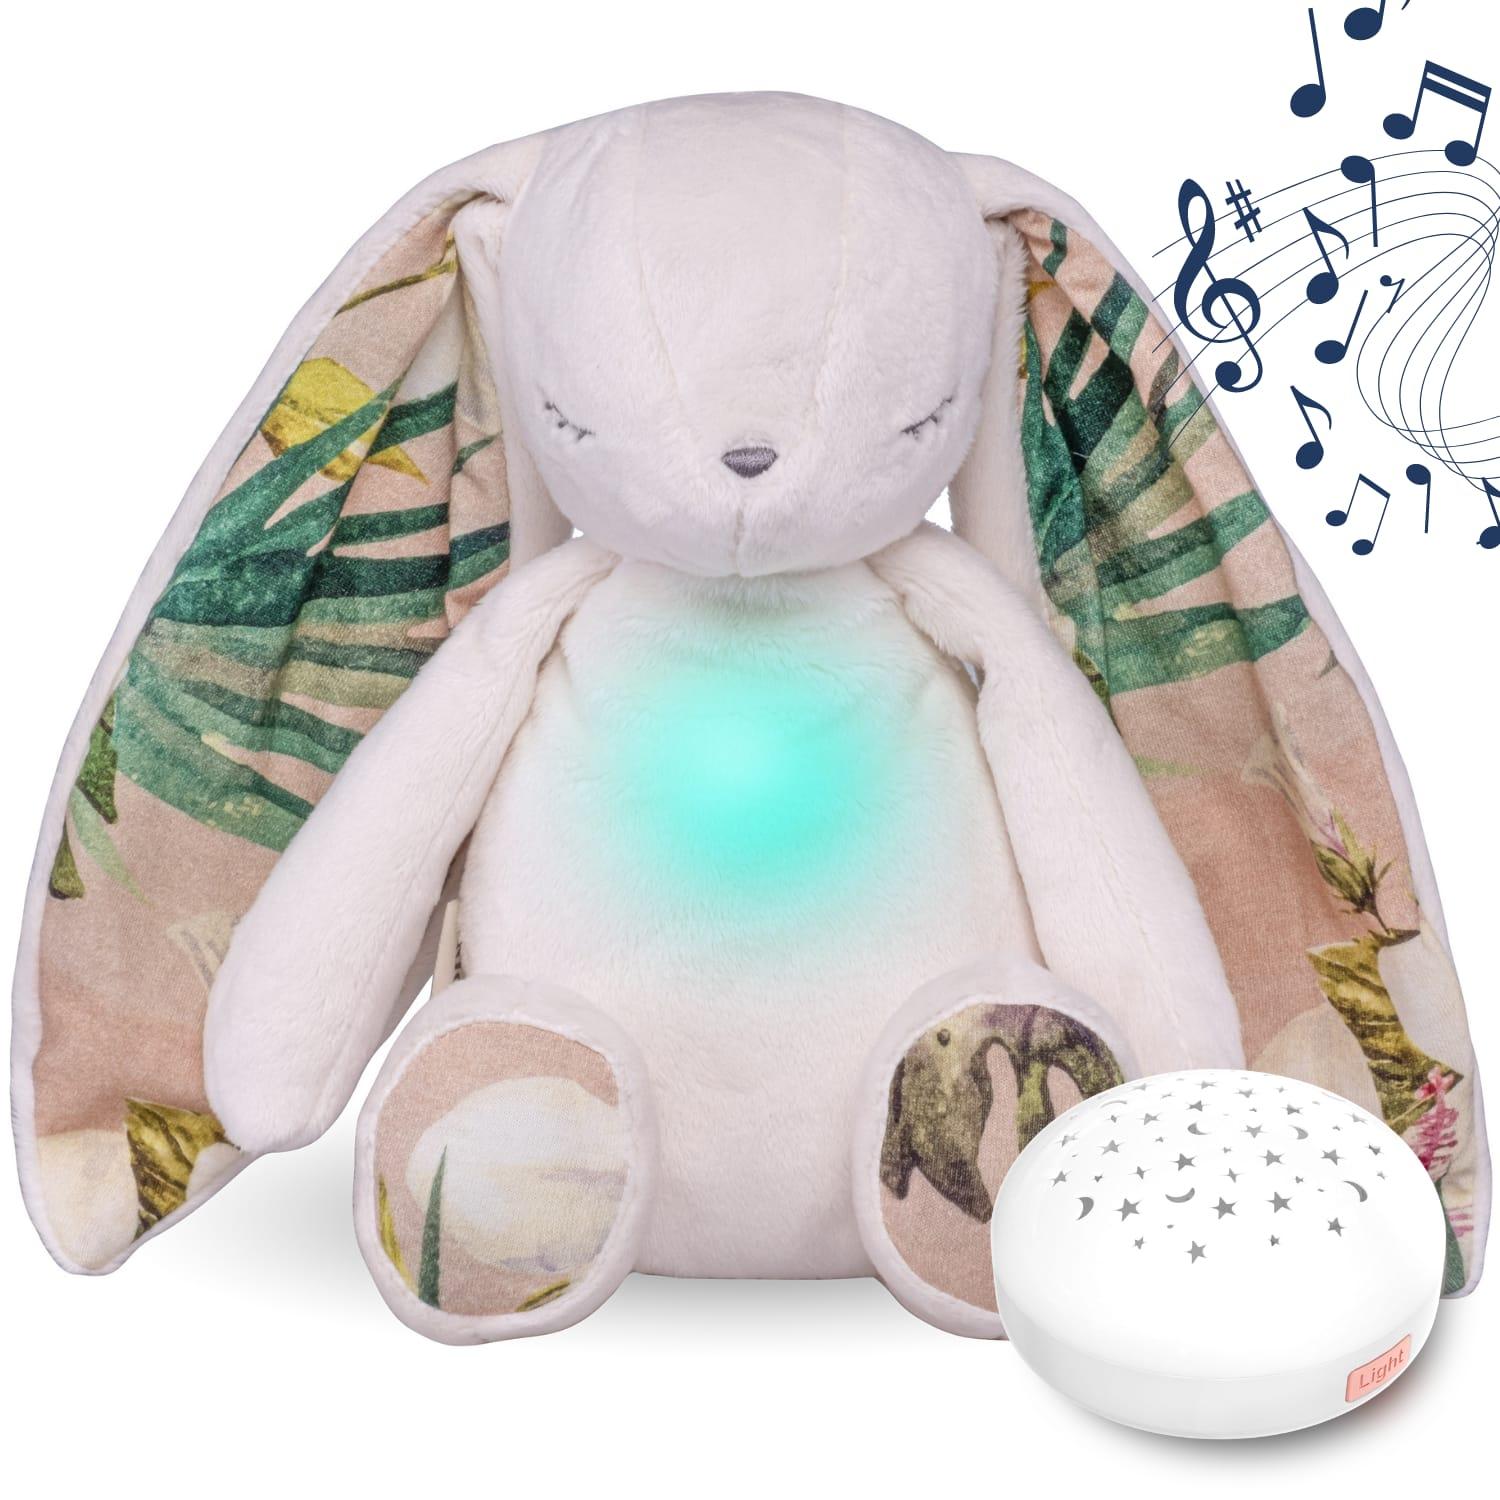 Noisy plush Diddou bear (with star projector) - ecru